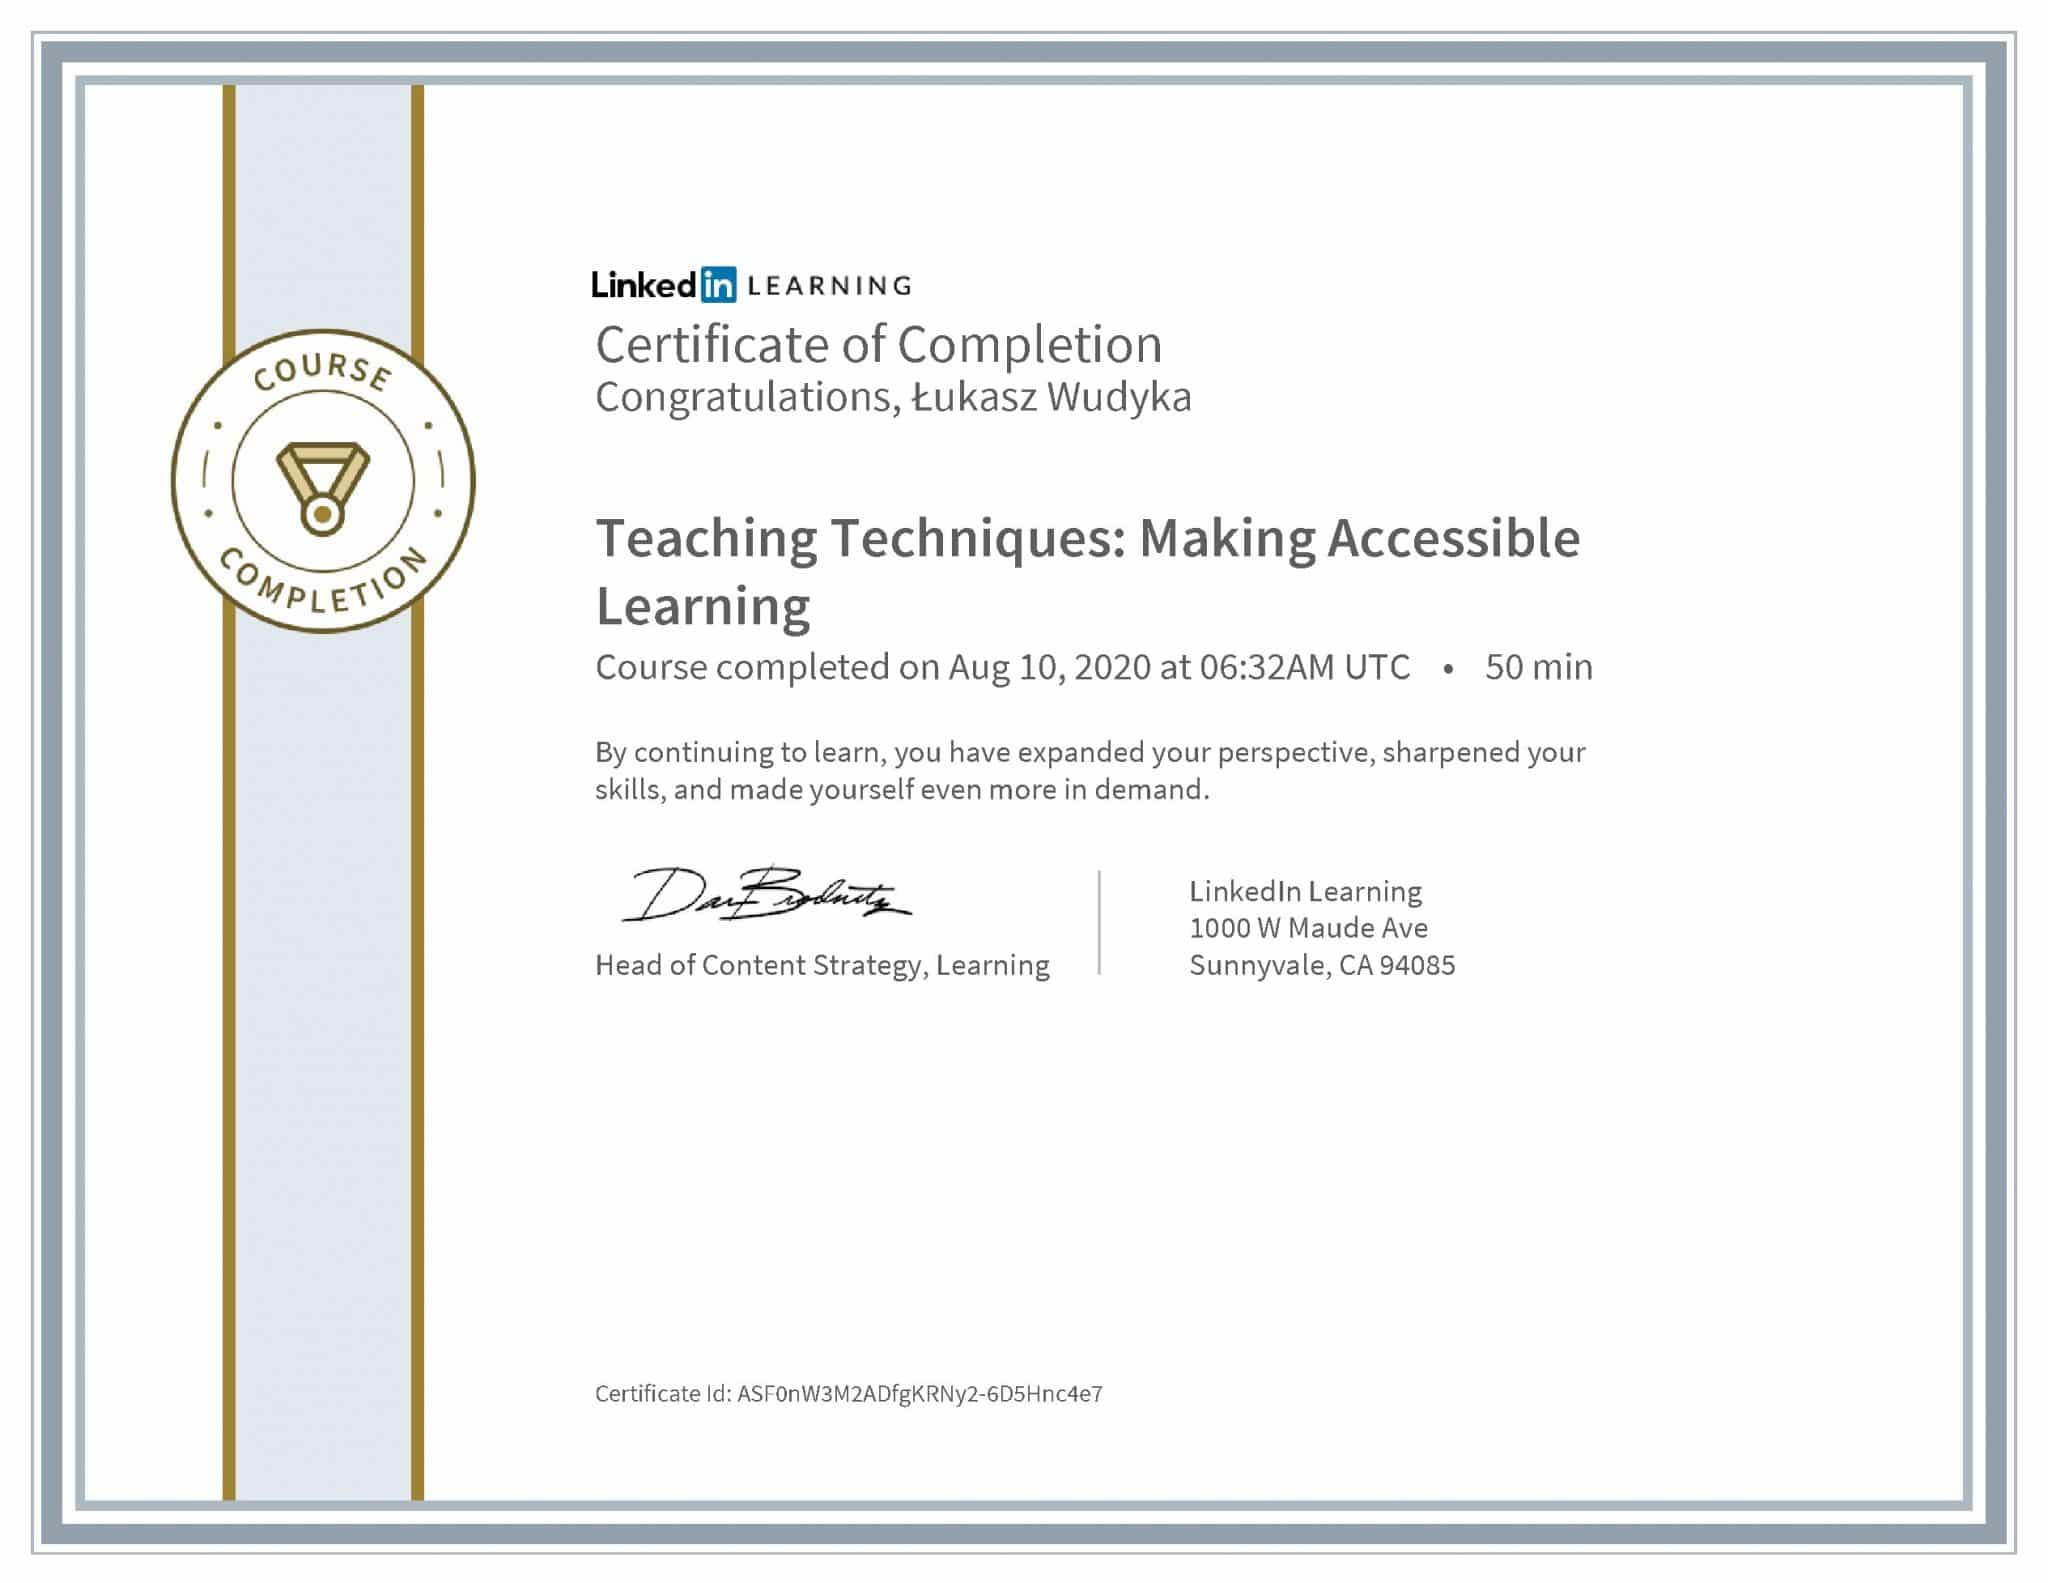 Łukasz Wudyka certyfikat LinkedIn Teaching Techniques: Making Accessible Learning